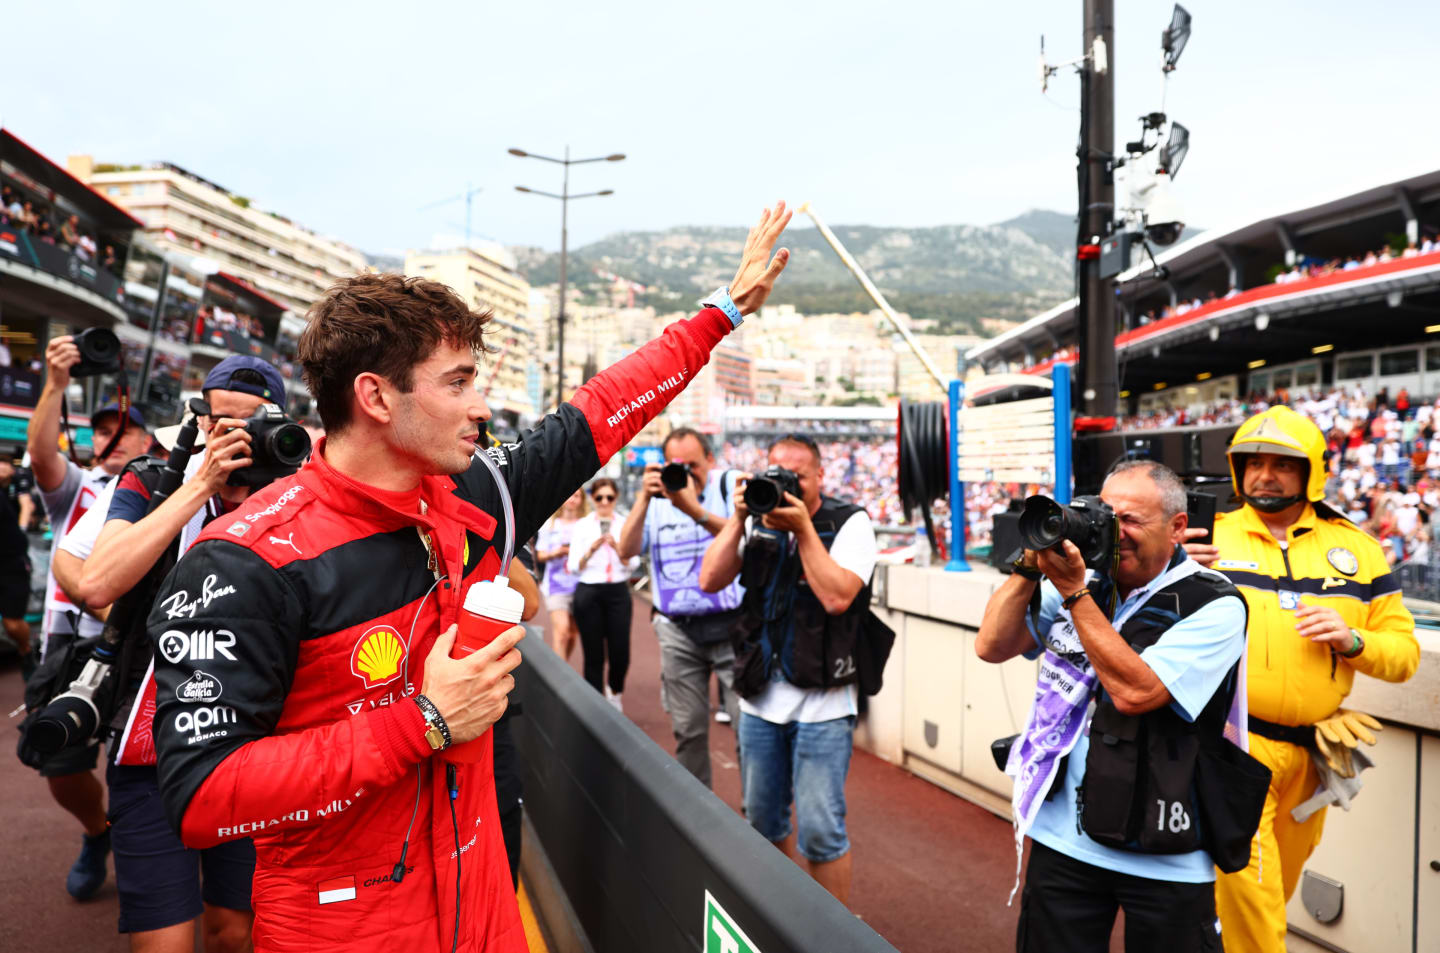 MONTE-CARLO, MONACO - MAY 28: Pole position qualifier Charles Leclerc of Monaco and Ferrari waves